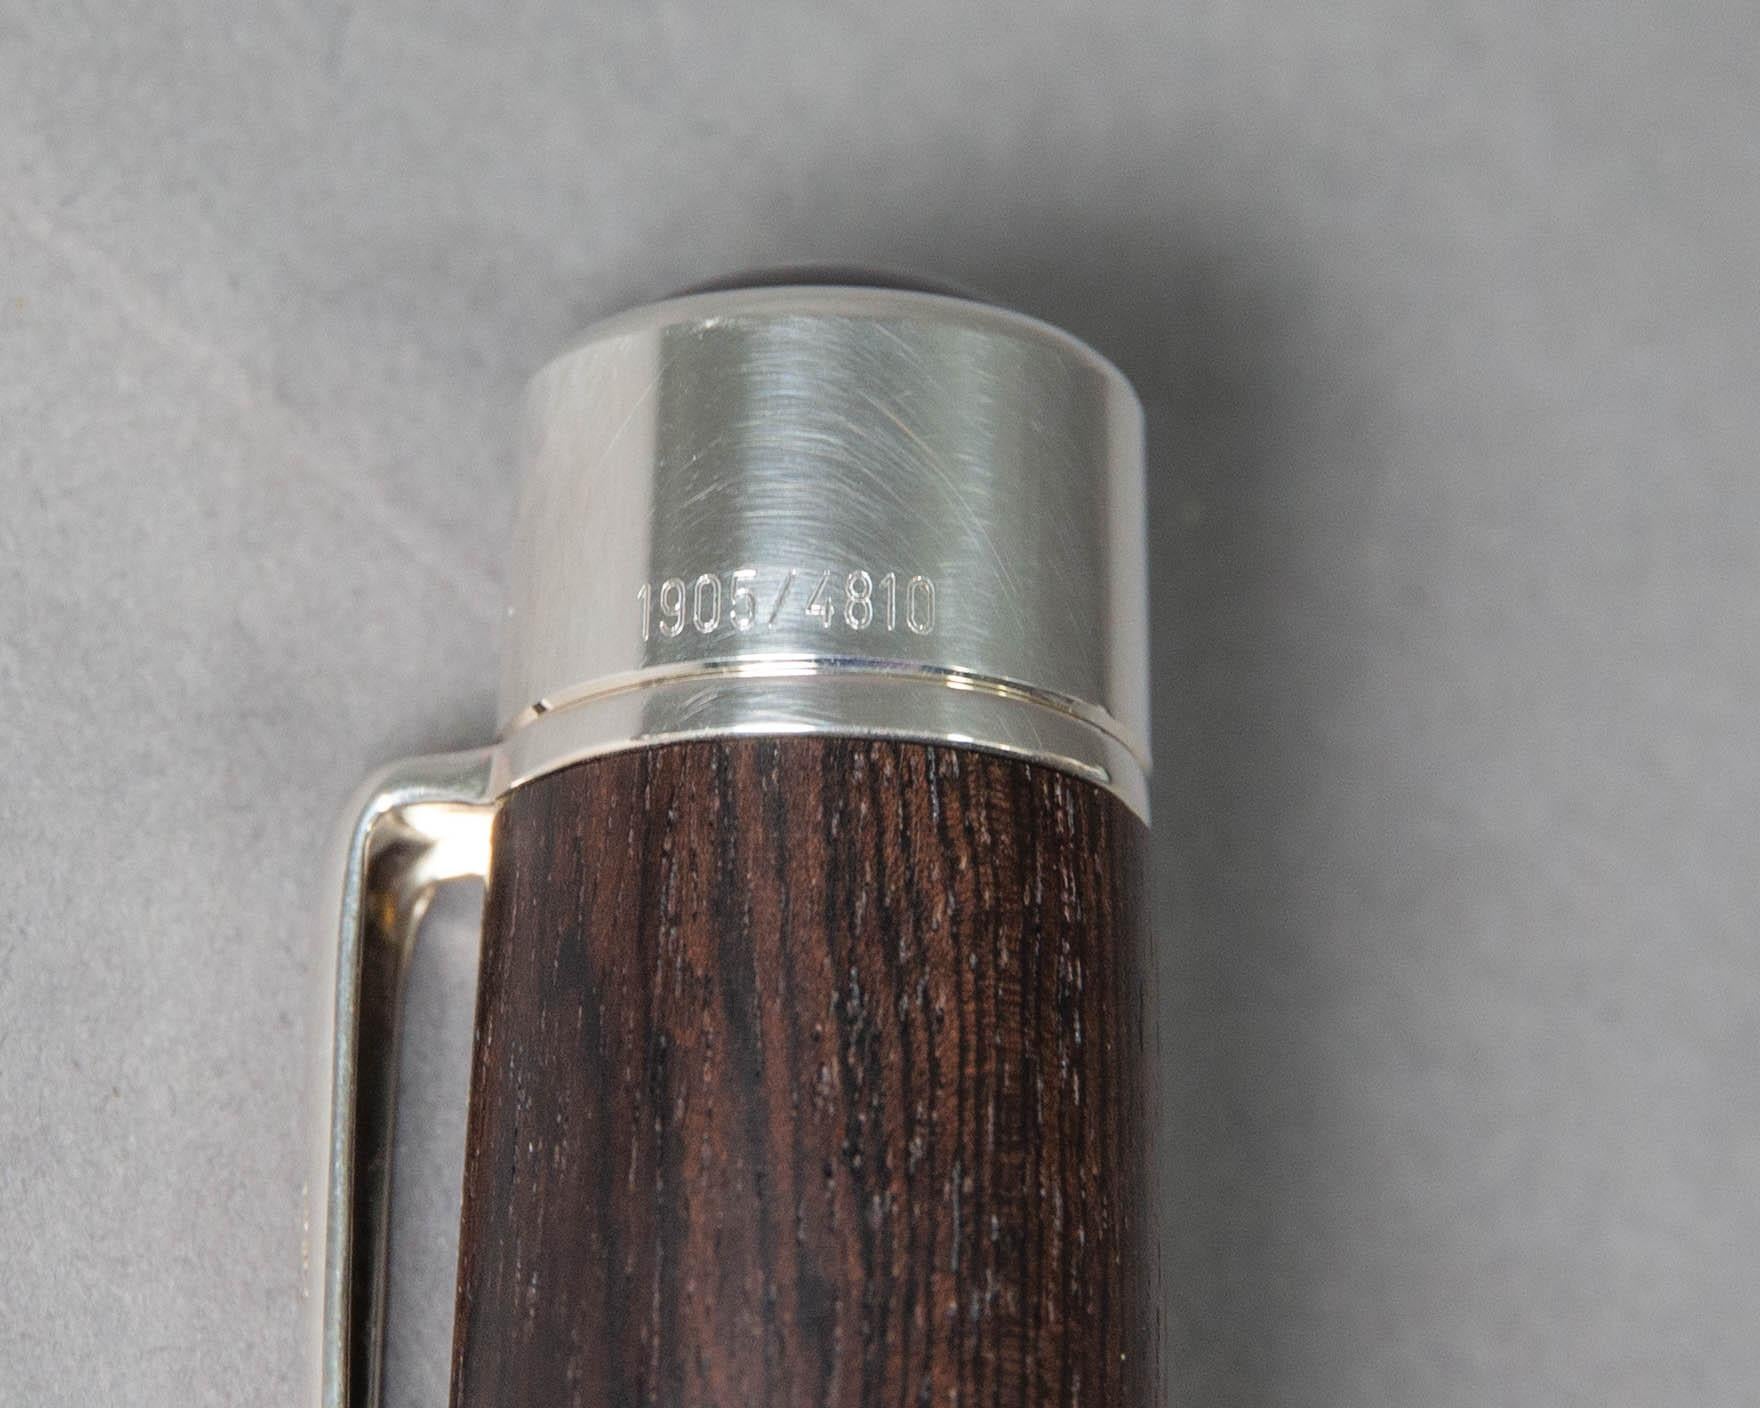 New Montblanc Limited Edition Alexander von Humboldt Fountain Pen 1905/4810 with 2